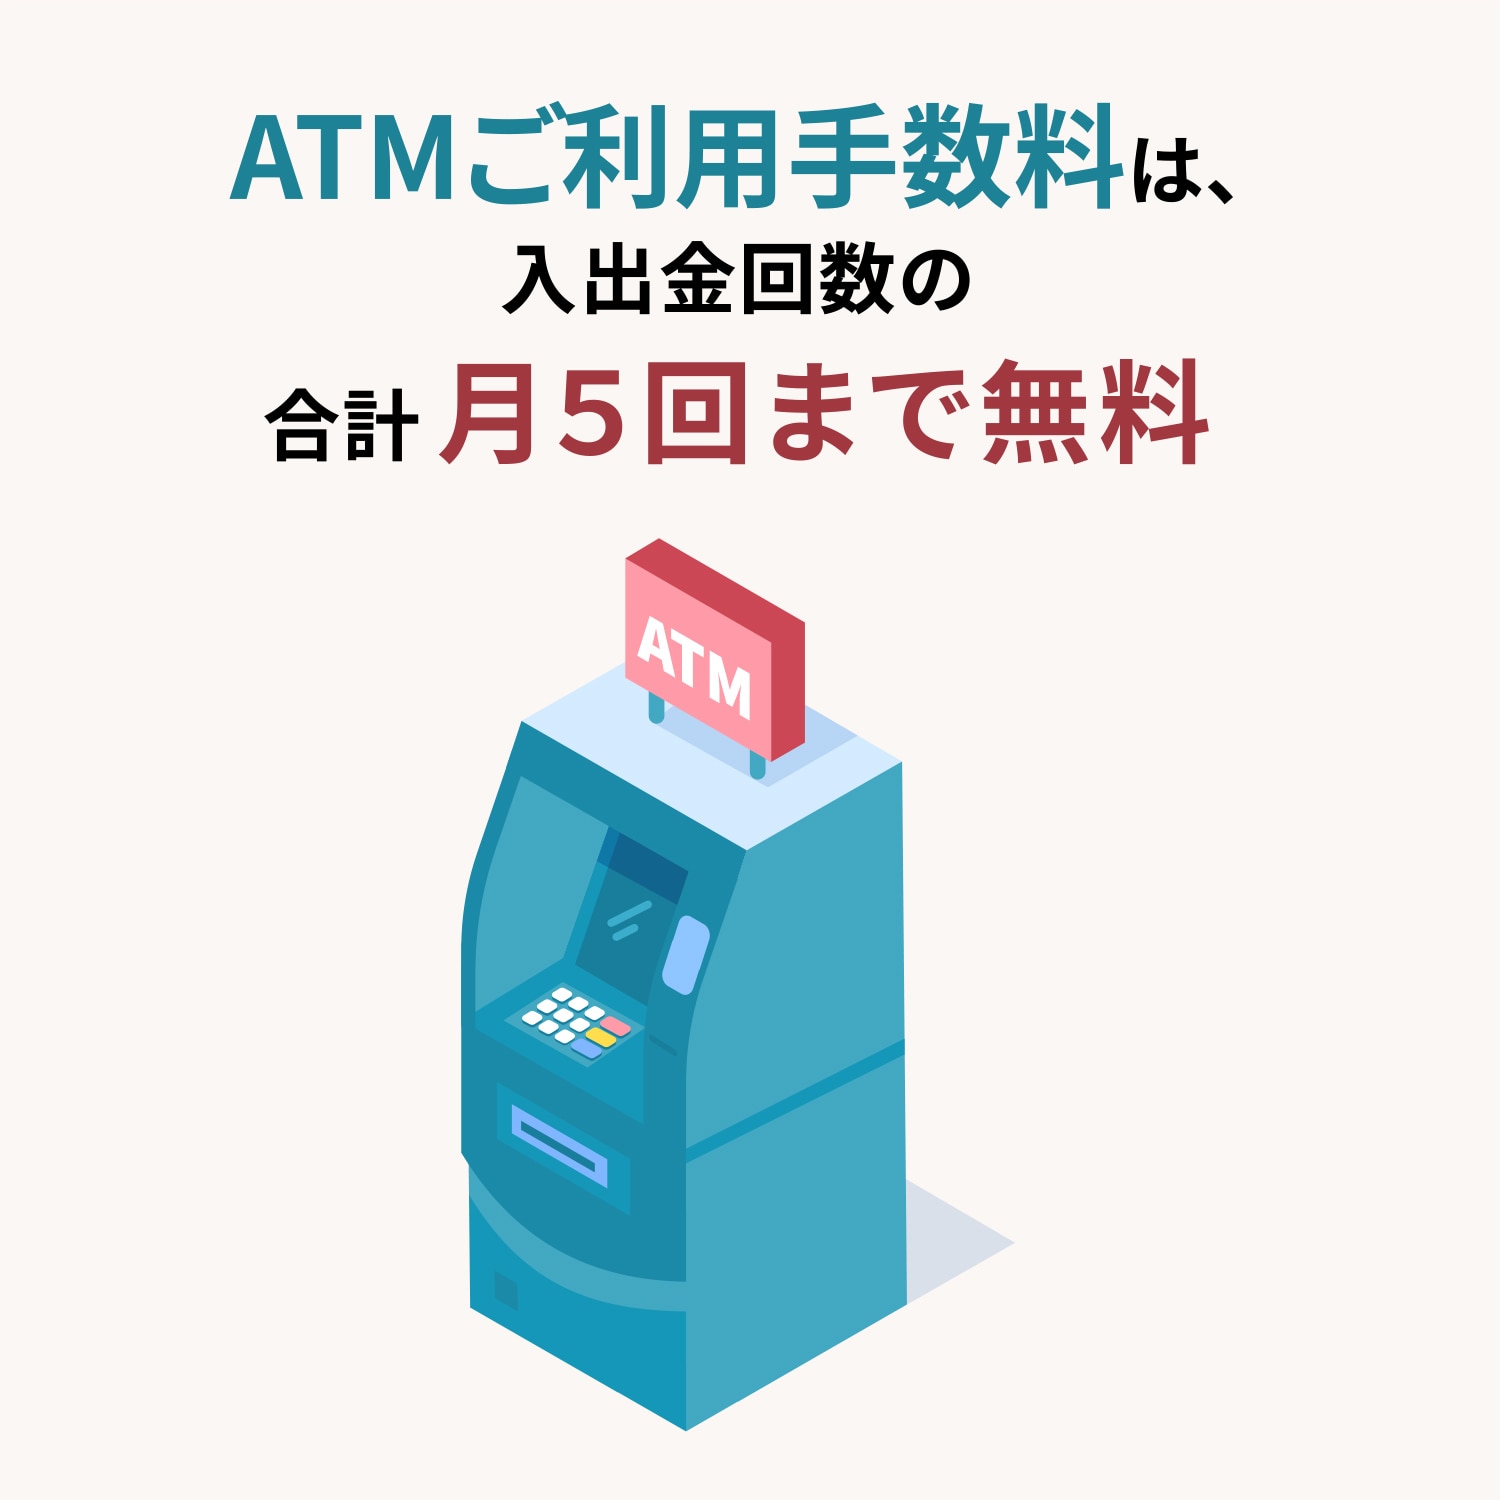 ATM利用手数料は、入出金回数の合計 月5回まで無料